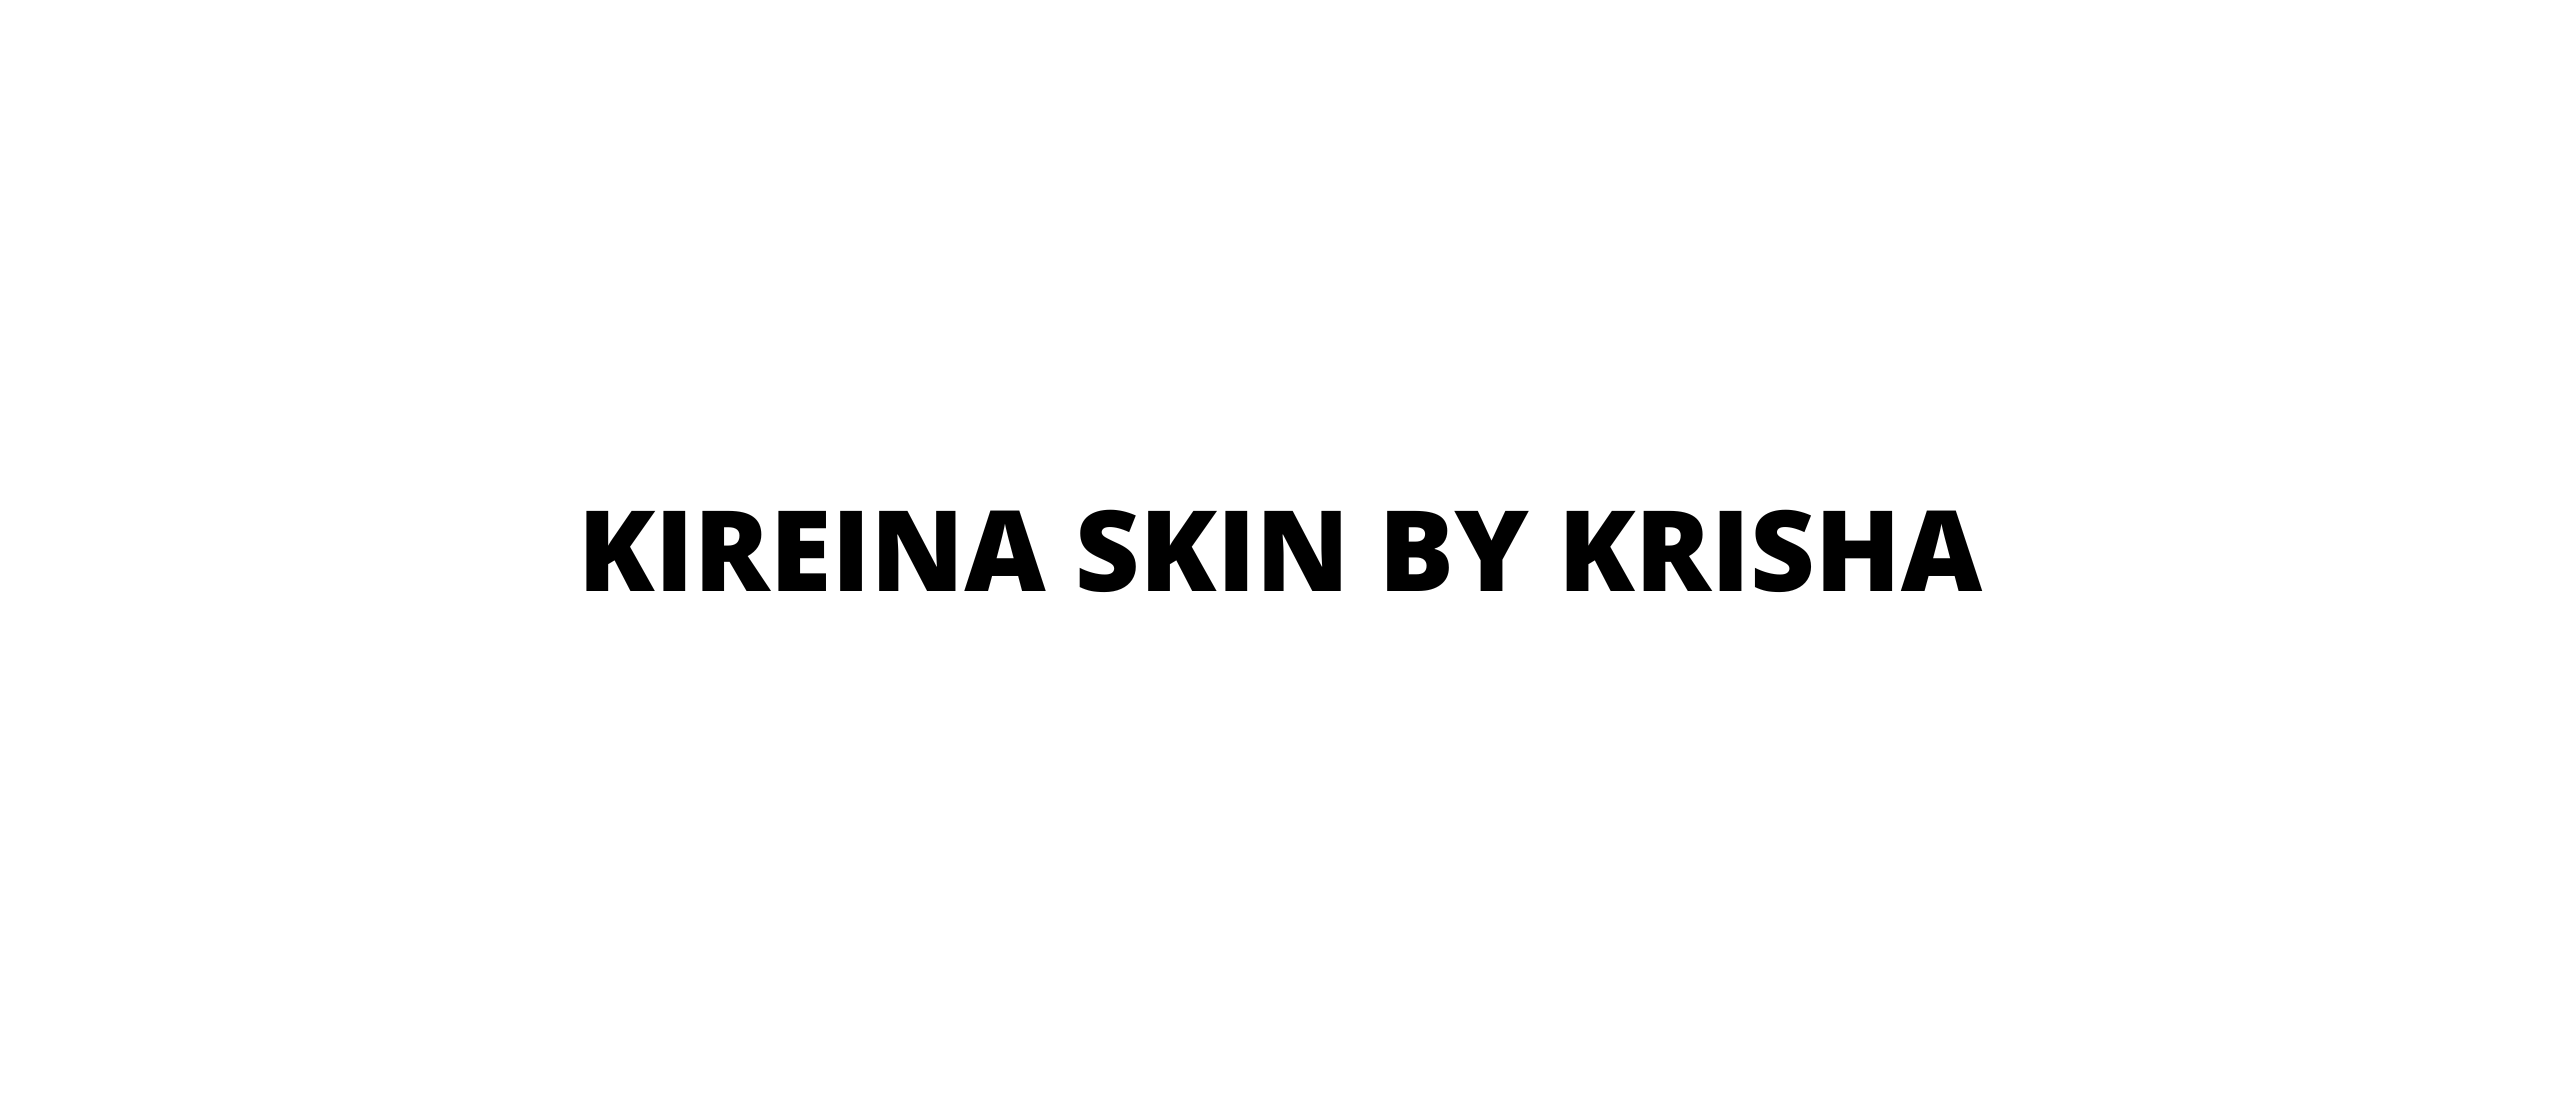 Kireina Skin by Krisha: Unieke Huidverzorging en Wenkbrauwspecialist in Breda